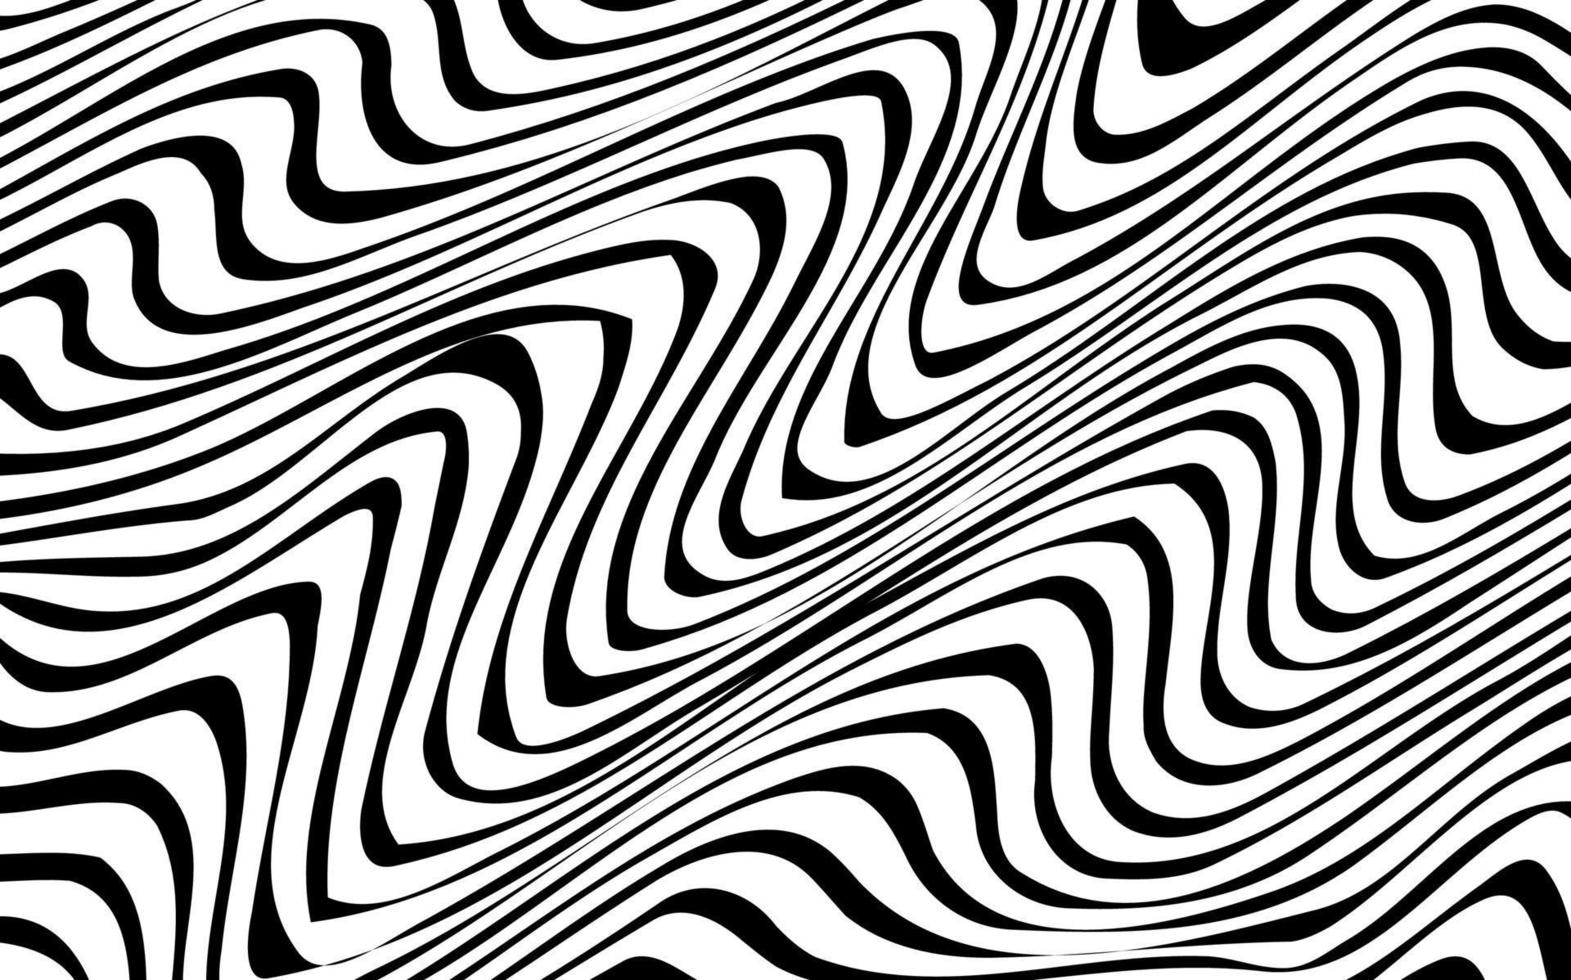 modieus abstract golvend achtergronden. naadloos gestreept patronen vector